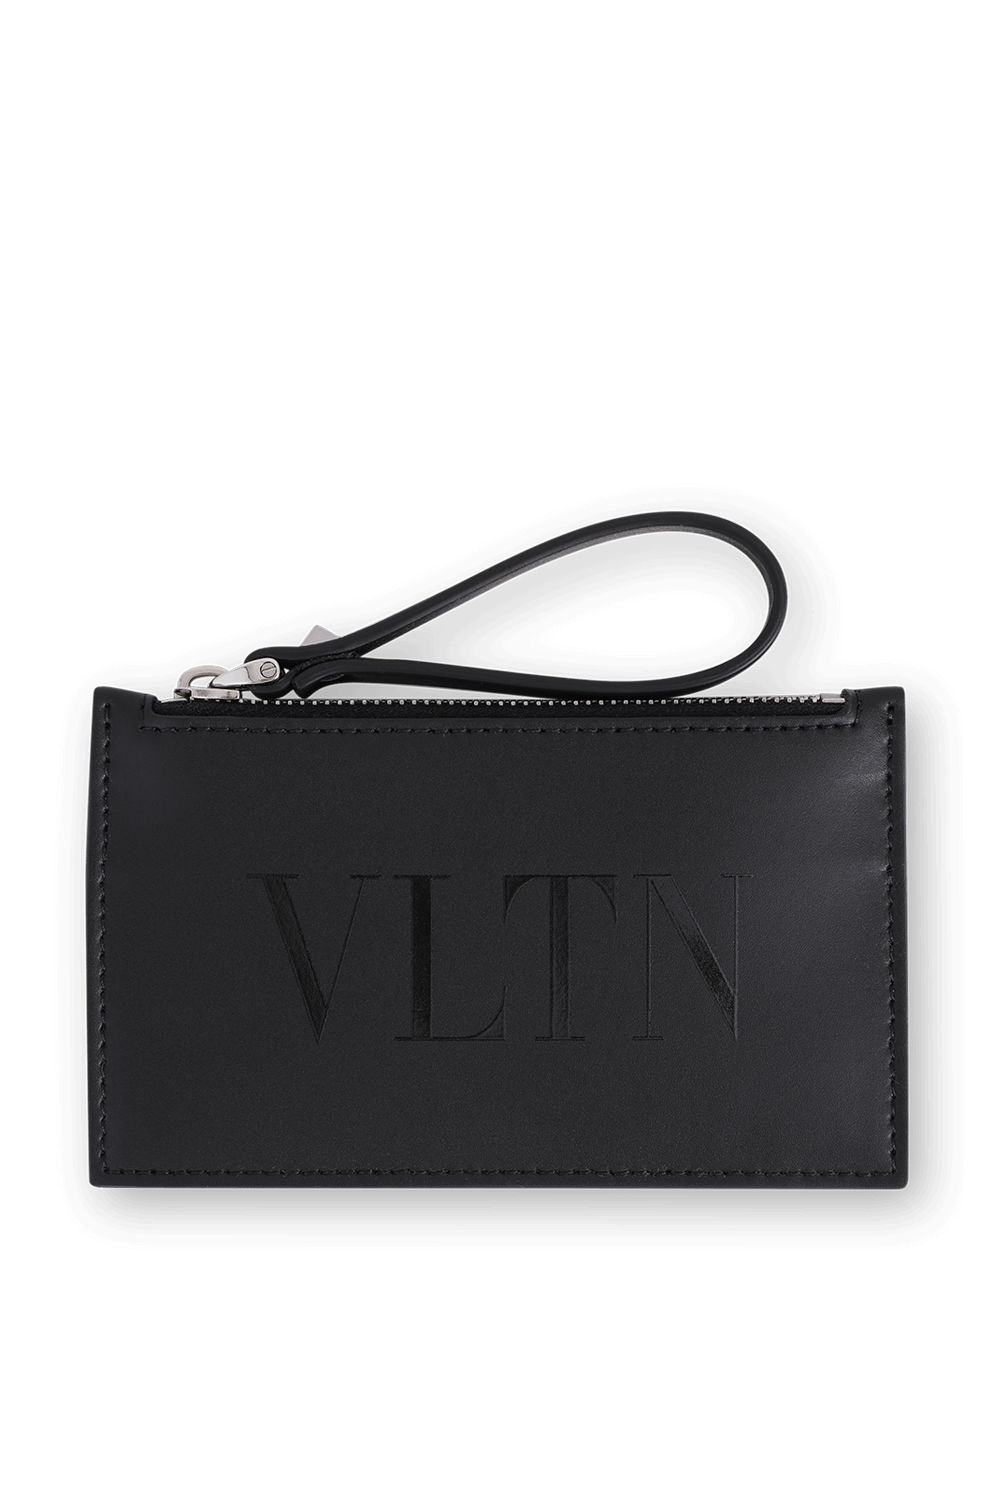 VLTN Leather Wallet in Black VALENTINO GARAVANI